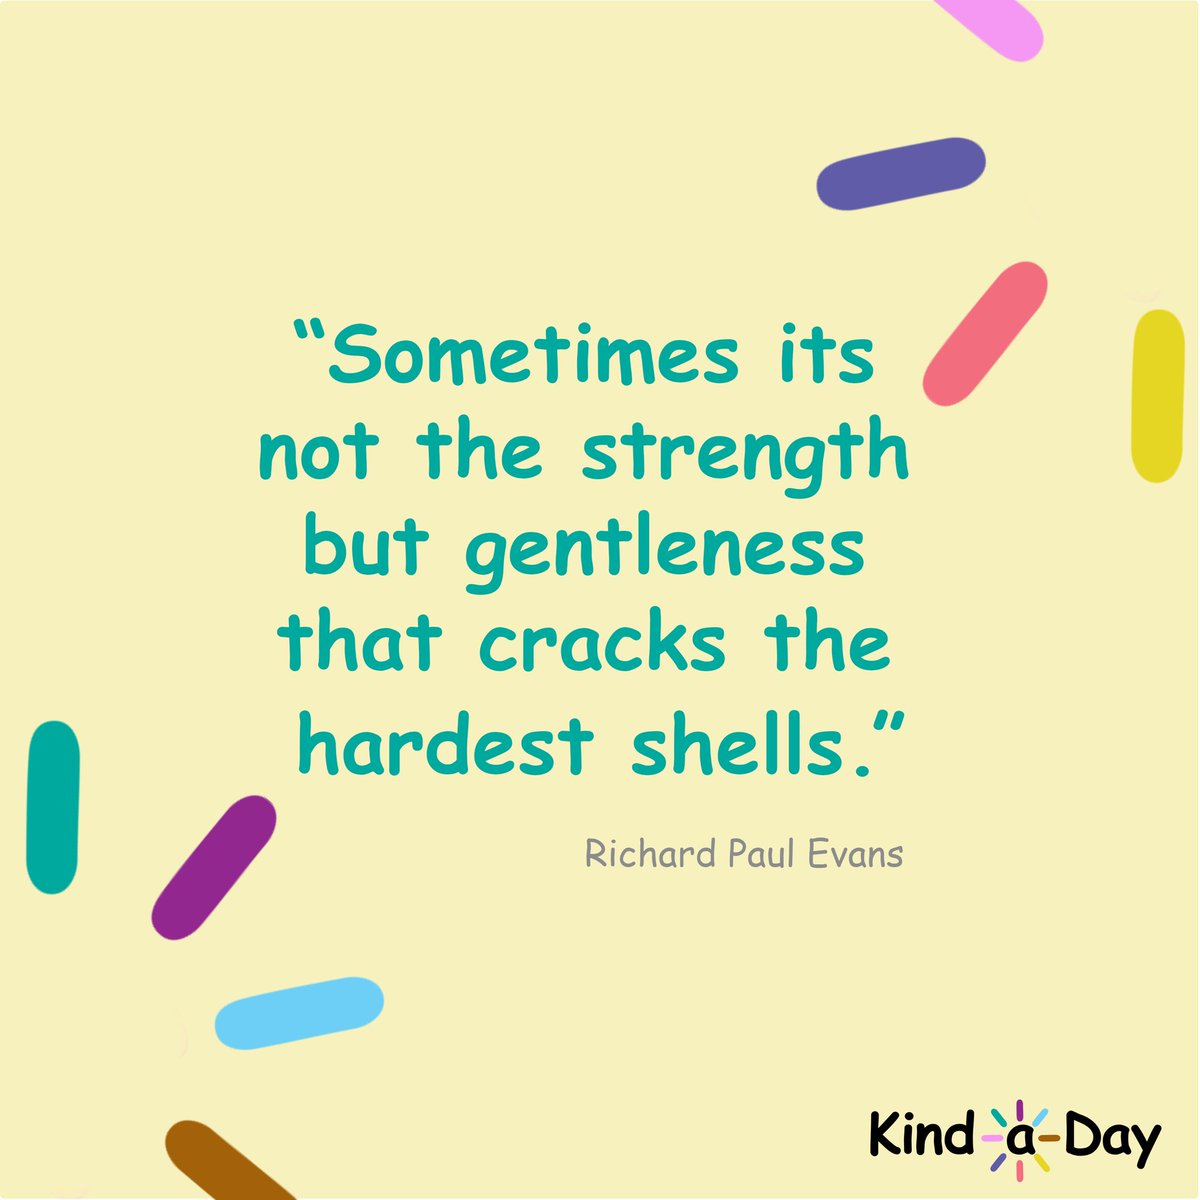 “Sometimes its not the strength but gentleness that cracks the hardest shells.” Richard Paul Evans 💕
 
#BeGentle #Gentle #RichardPaulEvans #kind #BeKind #kindness #KindLife #ActsOfKindness #SpreadKindness #KindnessMatters #ChooseKindness #KindnessWins #KindaDay #KindnessAlways